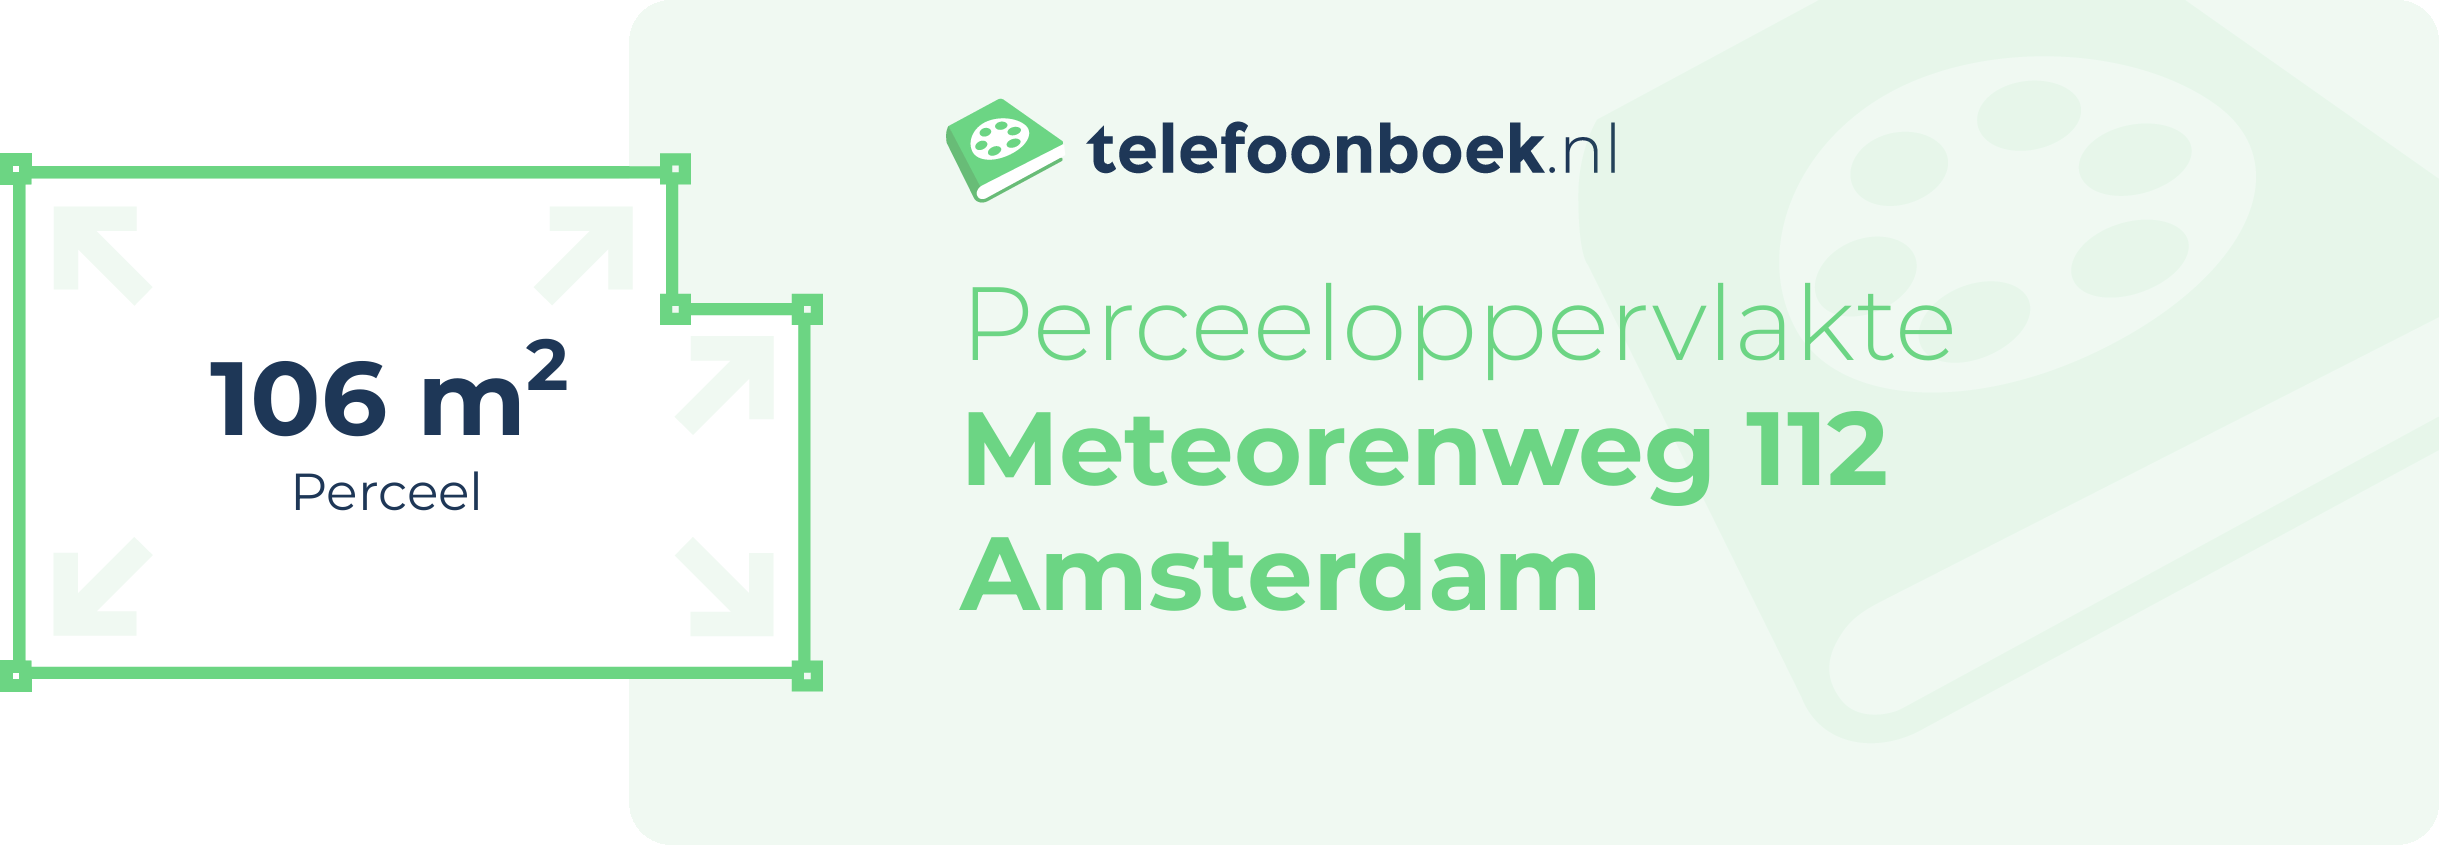 Perceeloppervlakte Meteorenweg 112 Amsterdam